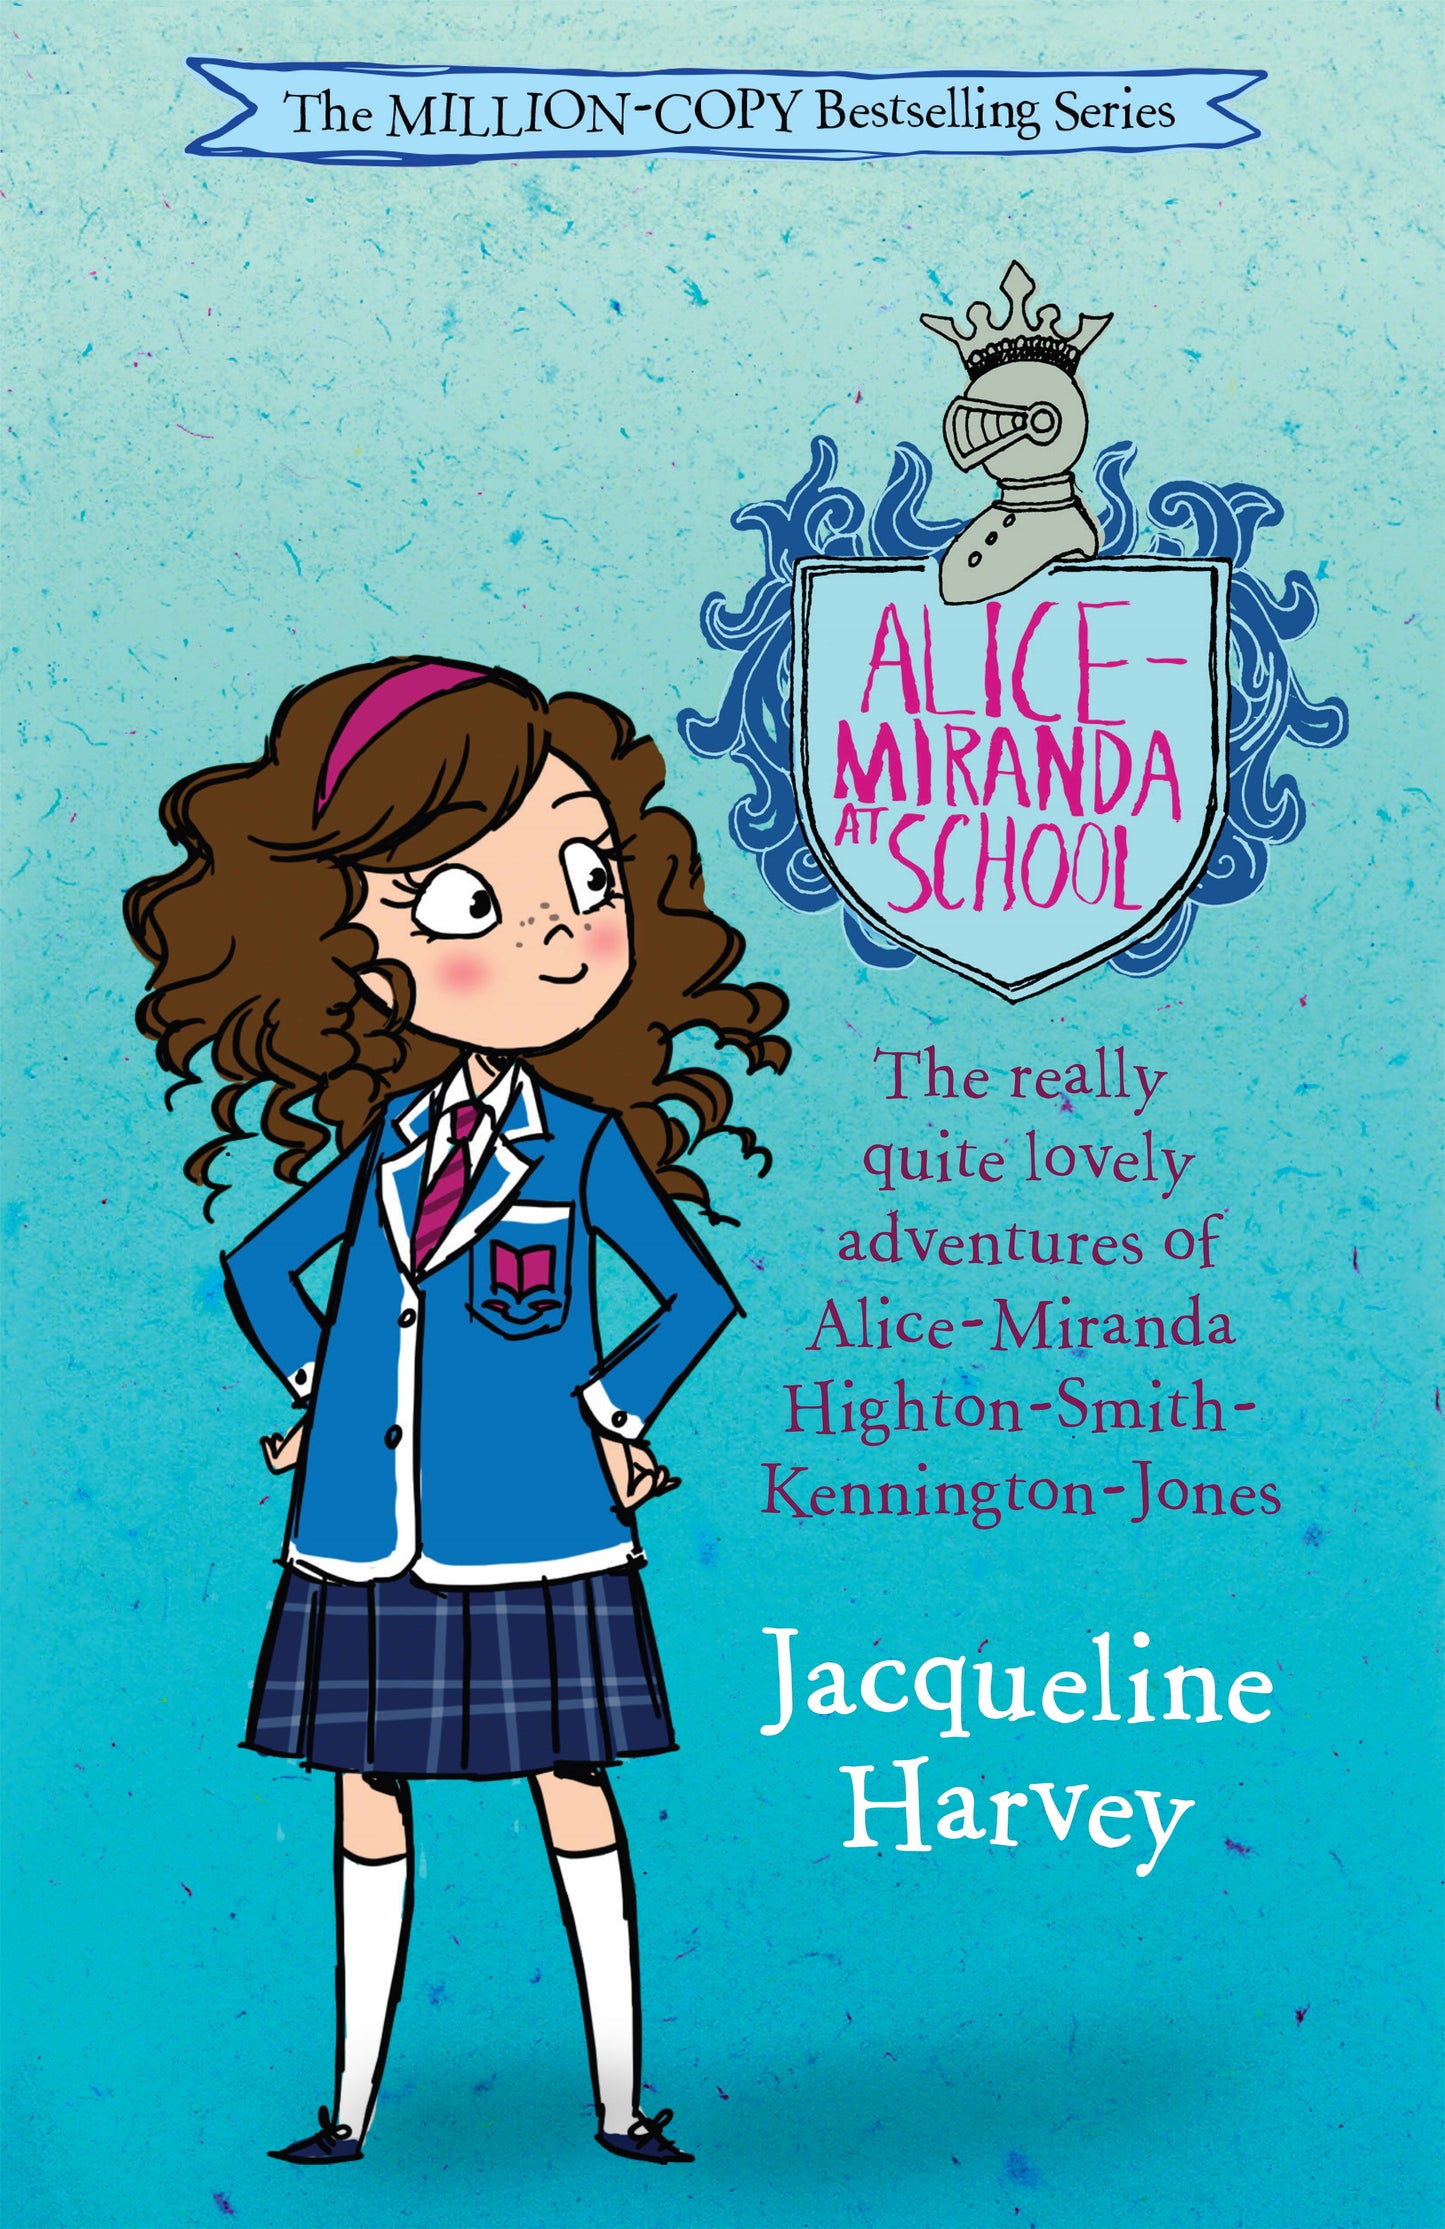 Alice-Miranda At School by Jacqueline Harvey